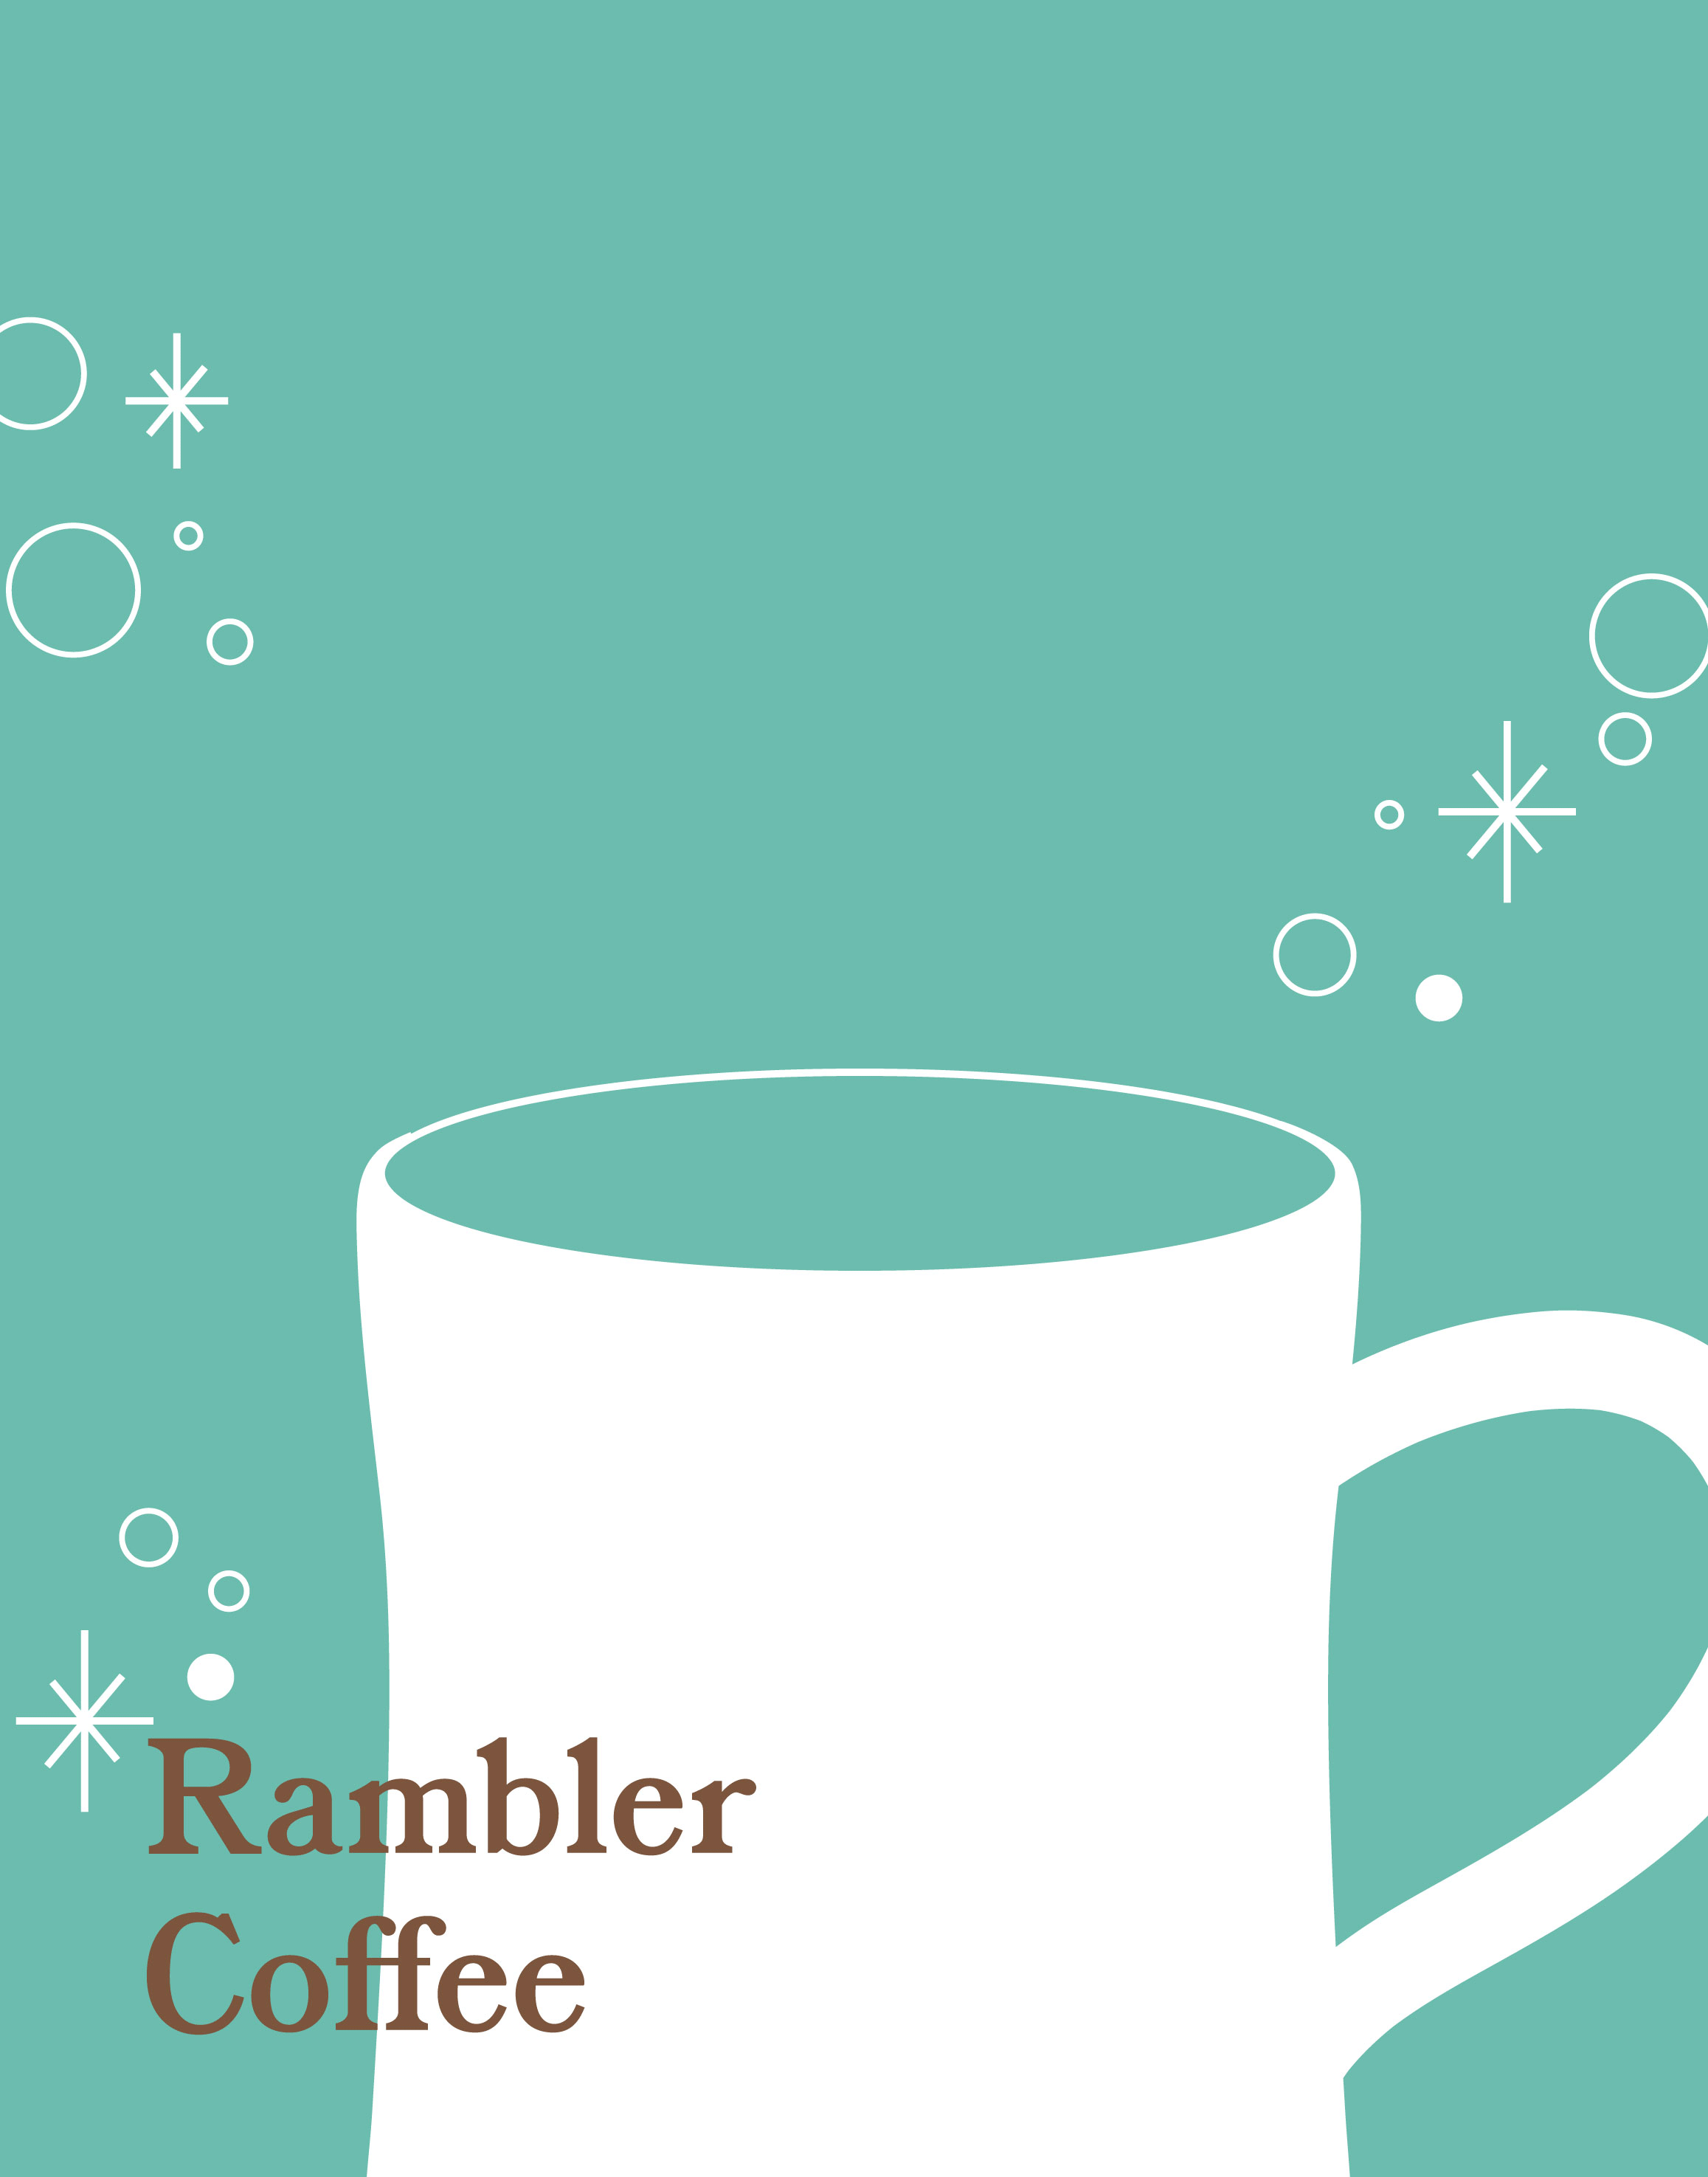 Rambler Coffee